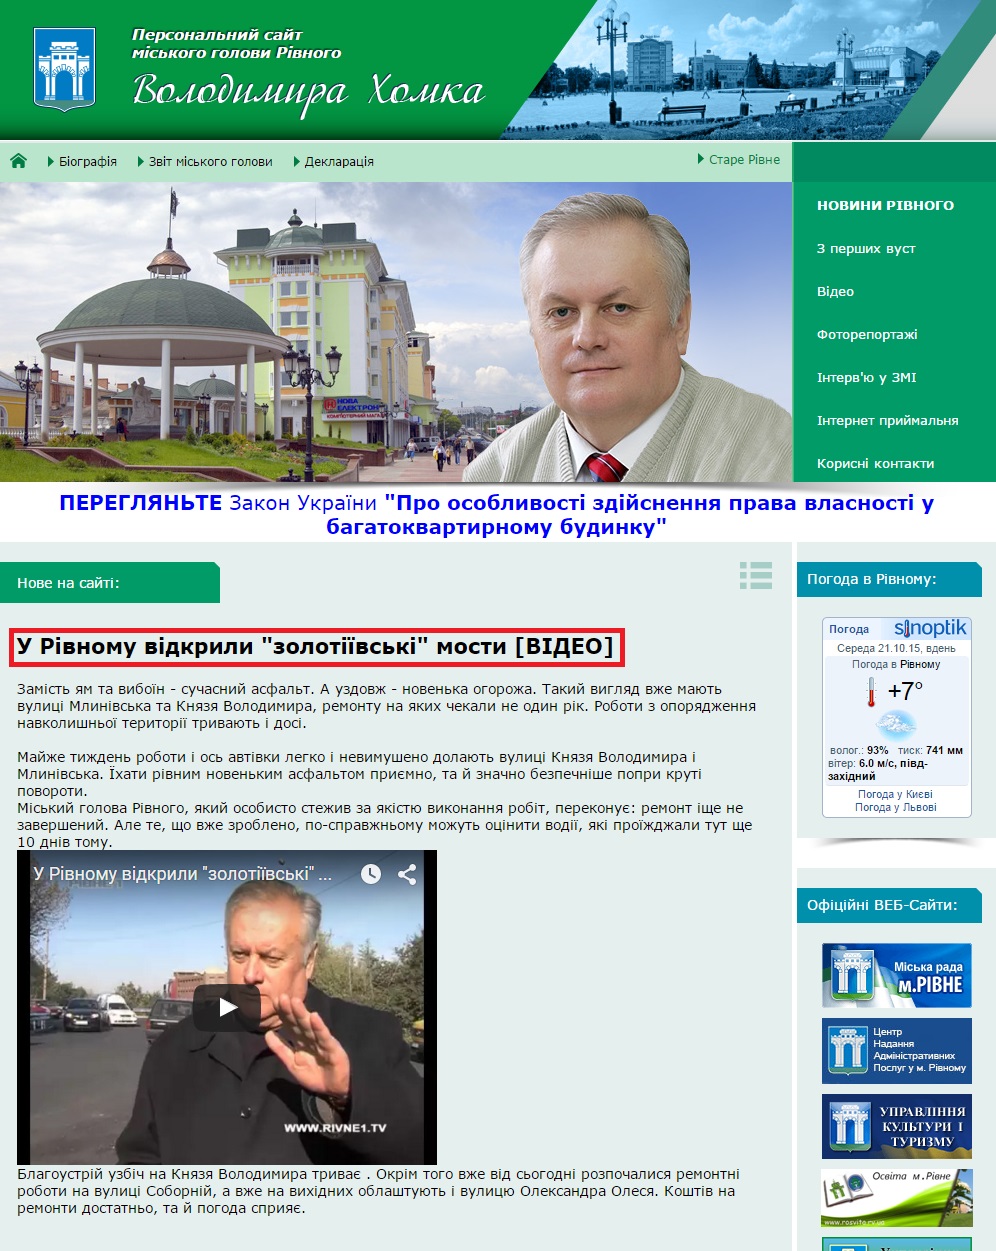 http://www.khomko.rv.ua/ContentPages/Public/Mayor/home.aspx?fdid=16310